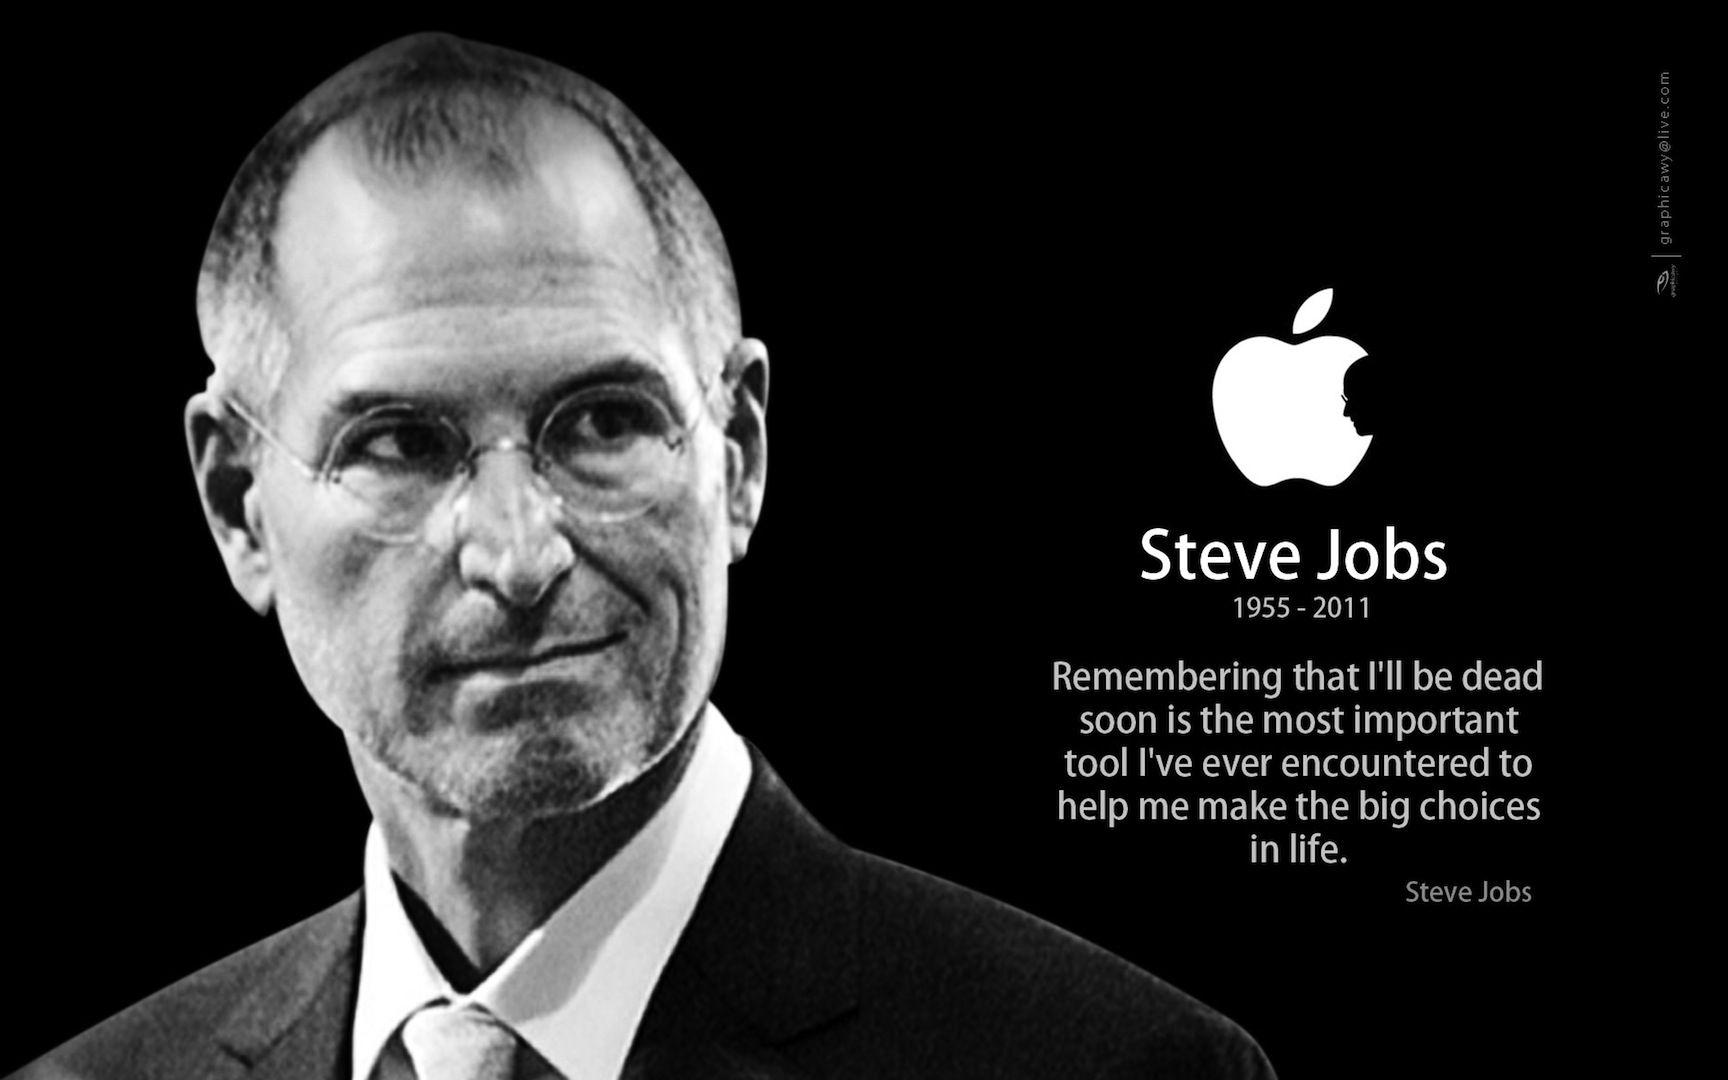 Steve Jobs Quotes HD Wallpaper Details. Steve jobs